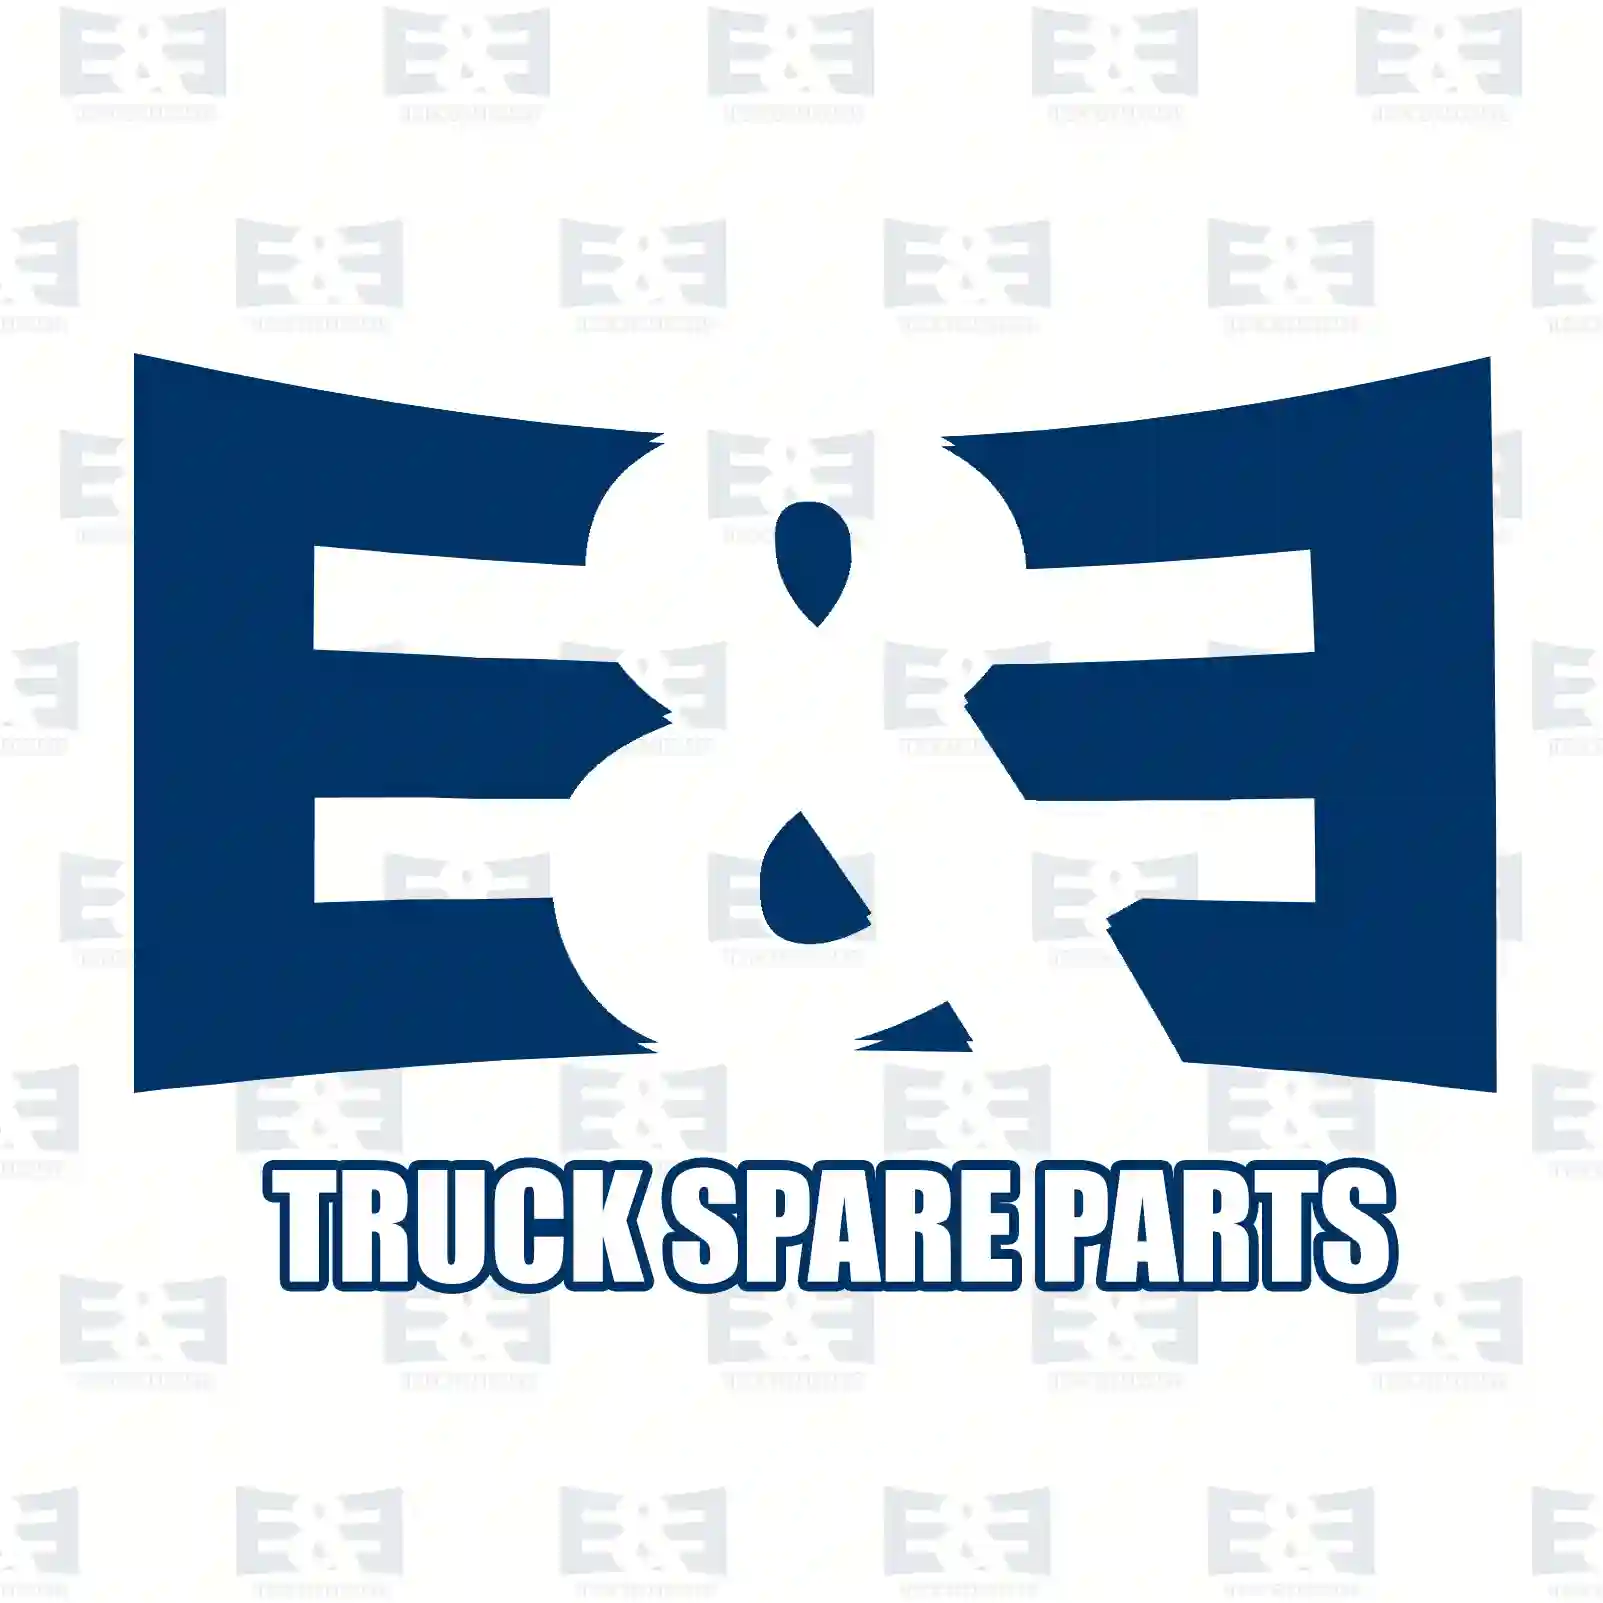 Resistor group, 2E2290630, 81259070253, N1011004166 ||  2E2290630 E&E Truck Spare Parts | Truck Spare Parts, Auotomotive Spare Parts Resistor group, 2E2290630, 81259070253, N1011004166 ||  2E2290630 E&E Truck Spare Parts | Truck Spare Parts, Auotomotive Spare Parts